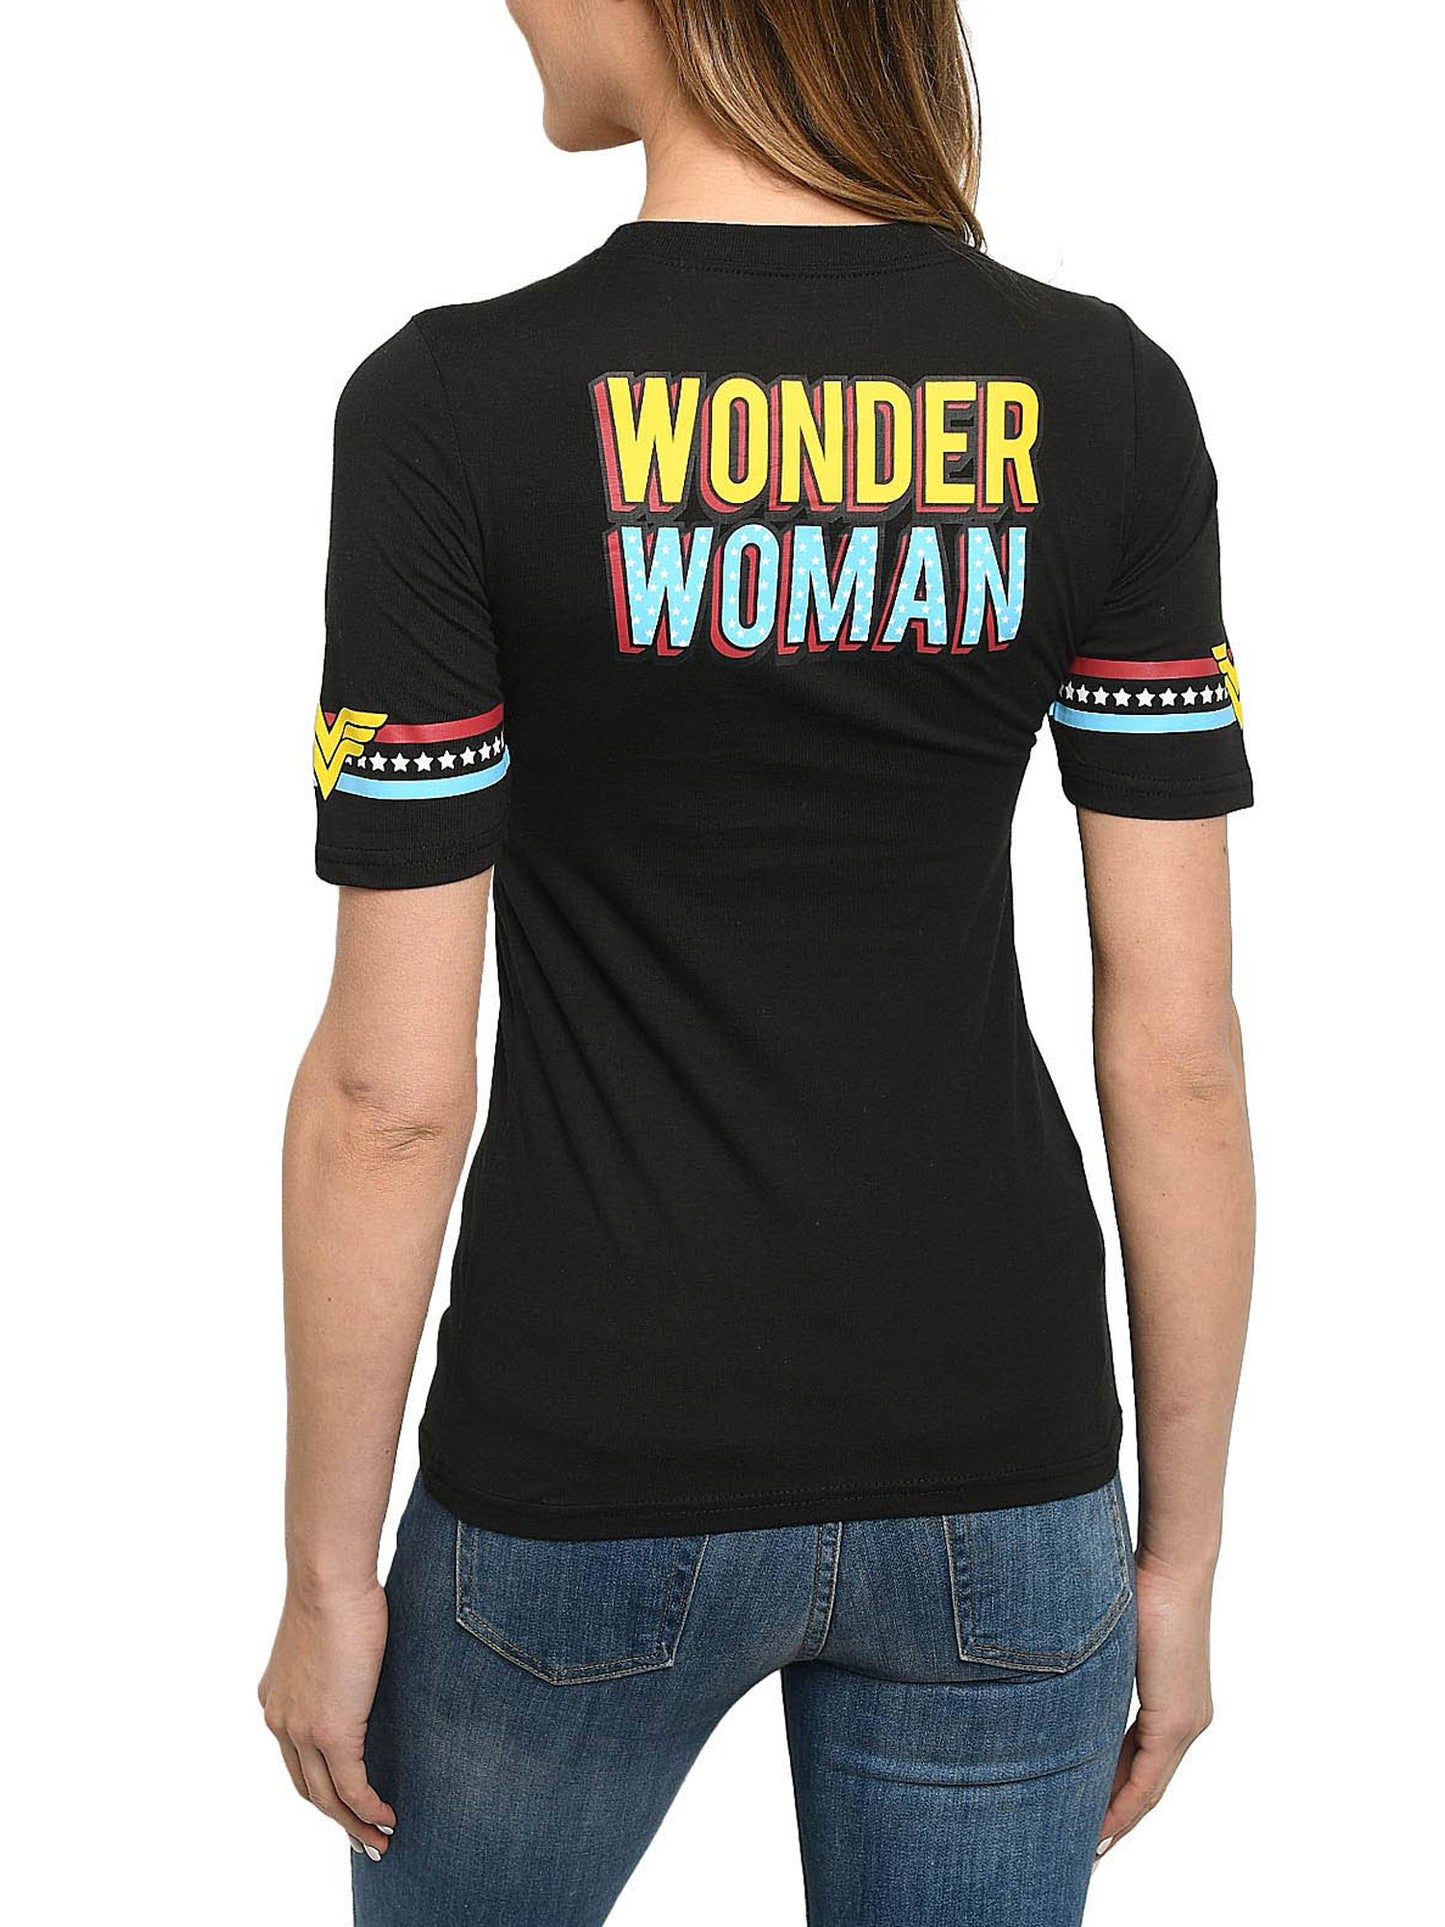 Juniors Wonder Woman T-shirt Front & Back Graphic Print Black